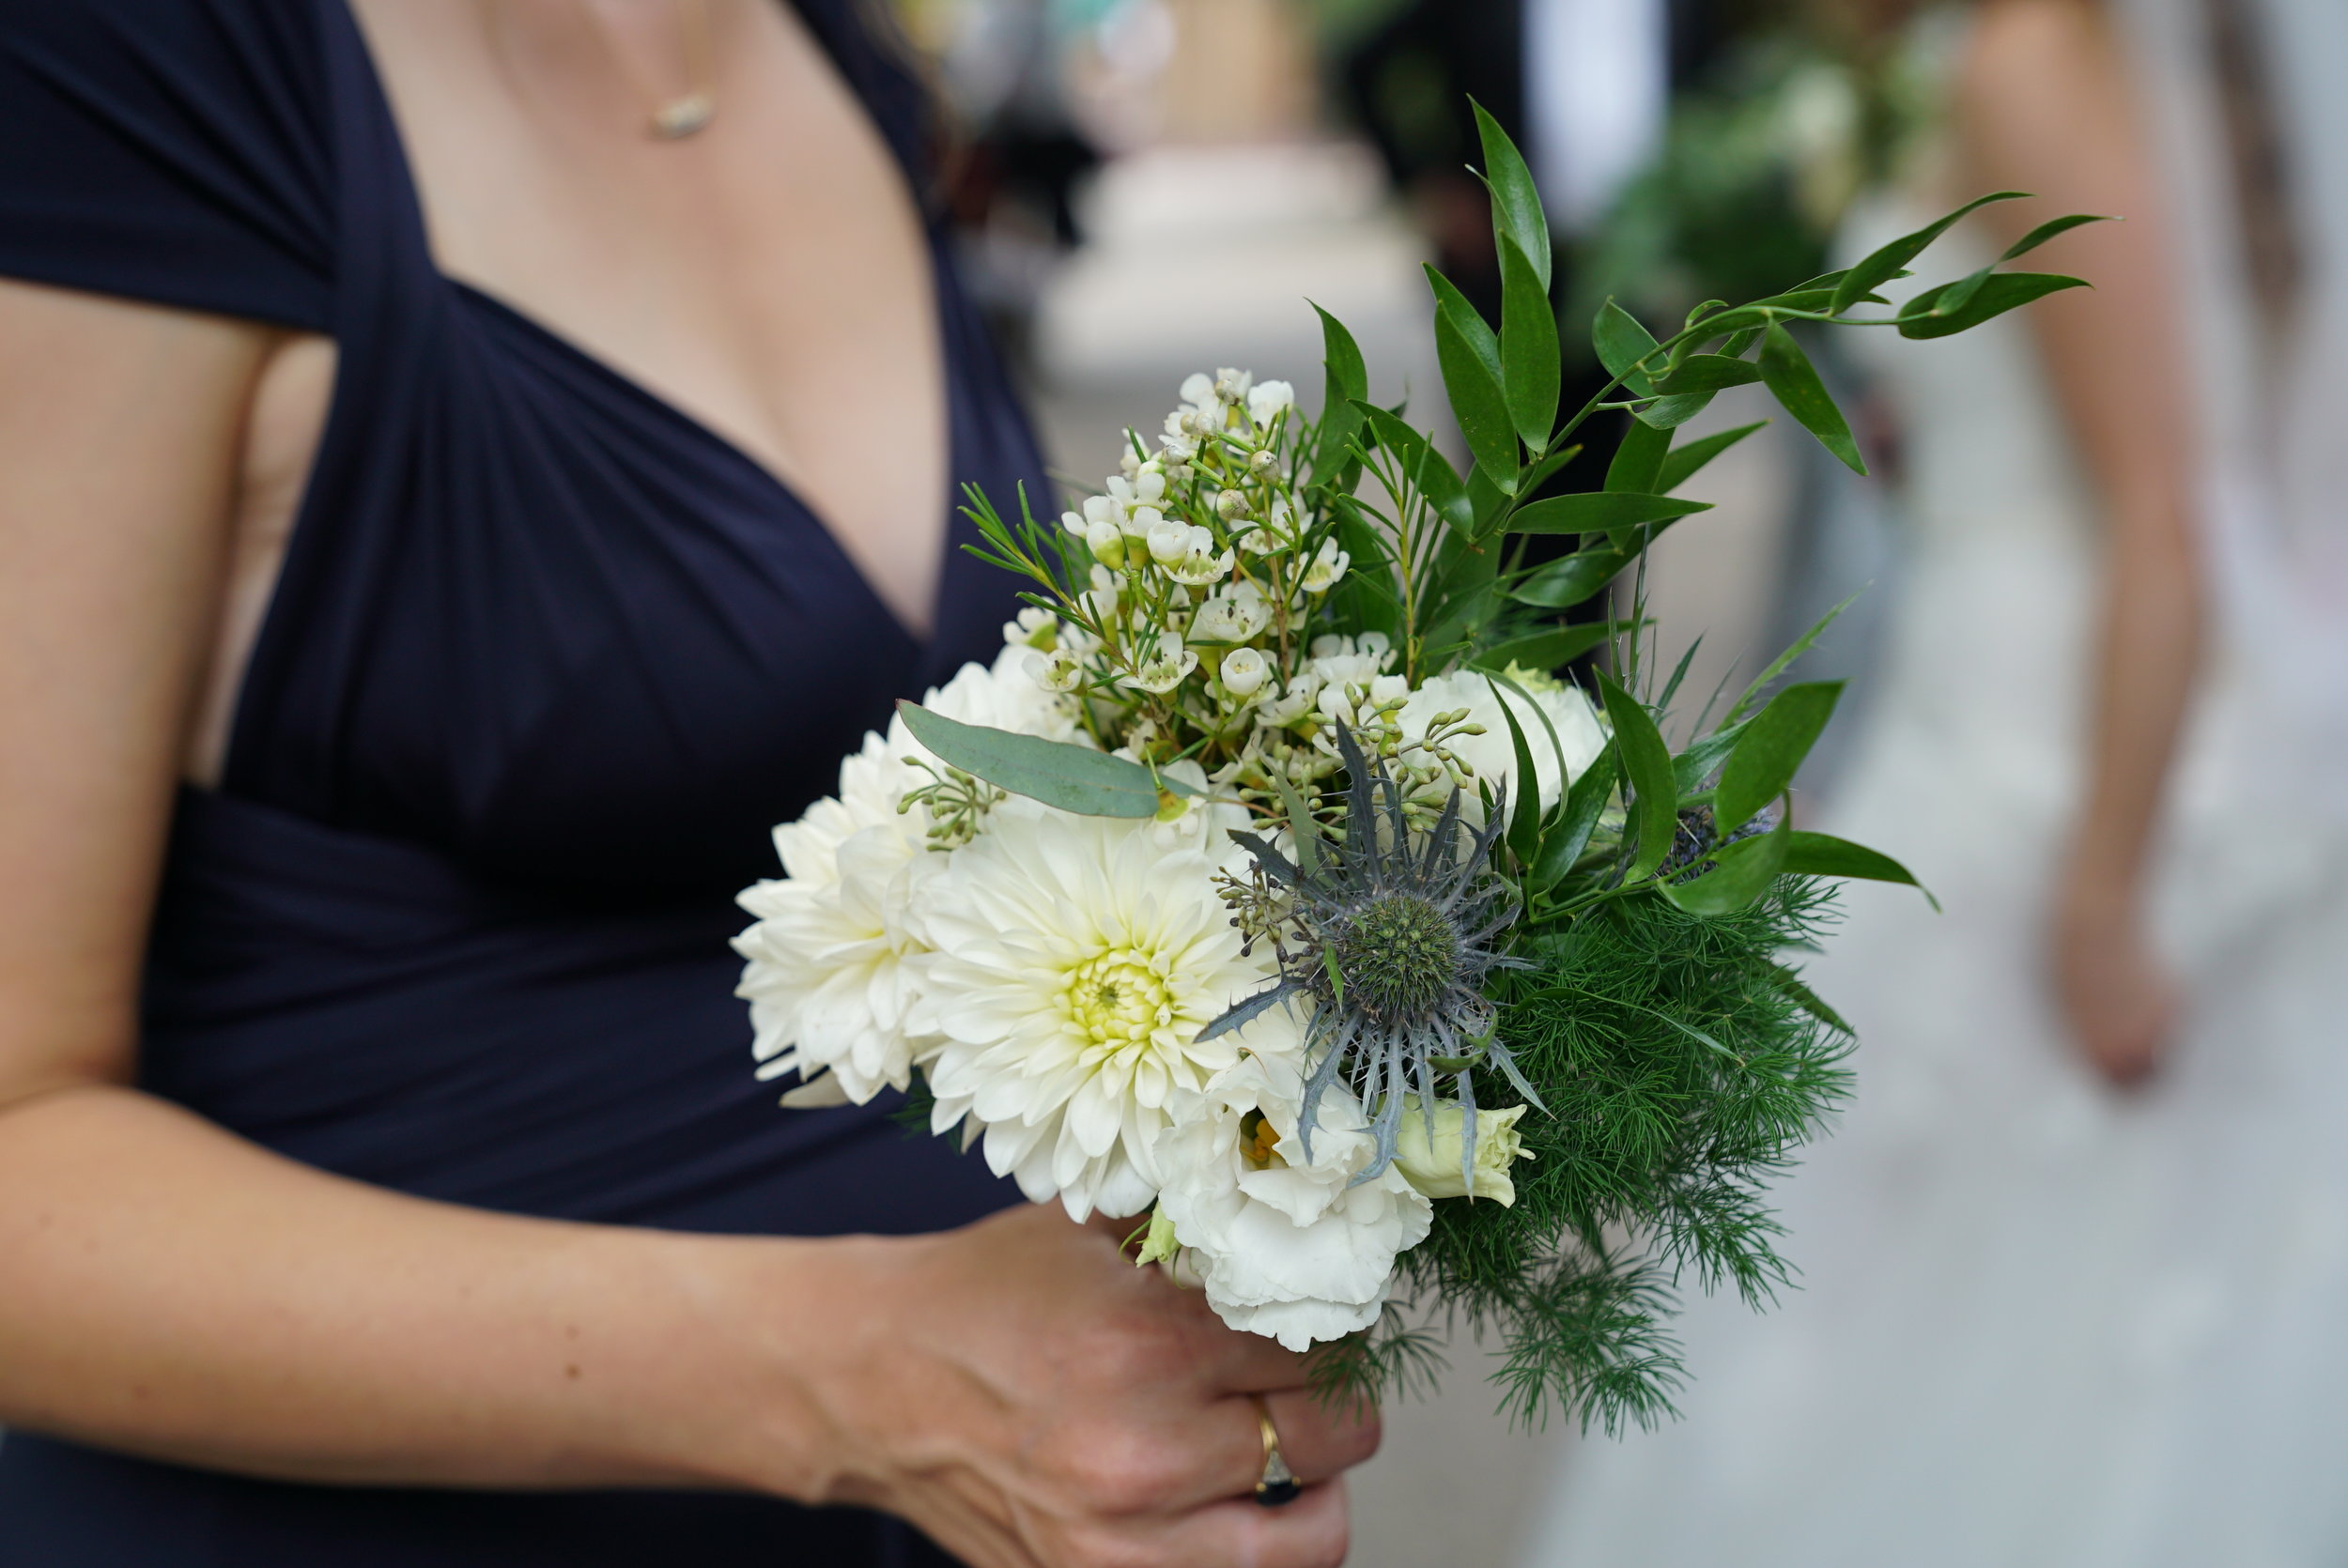  Bridesmaids bouquets were smaller versions of the brides.&nbsp; 